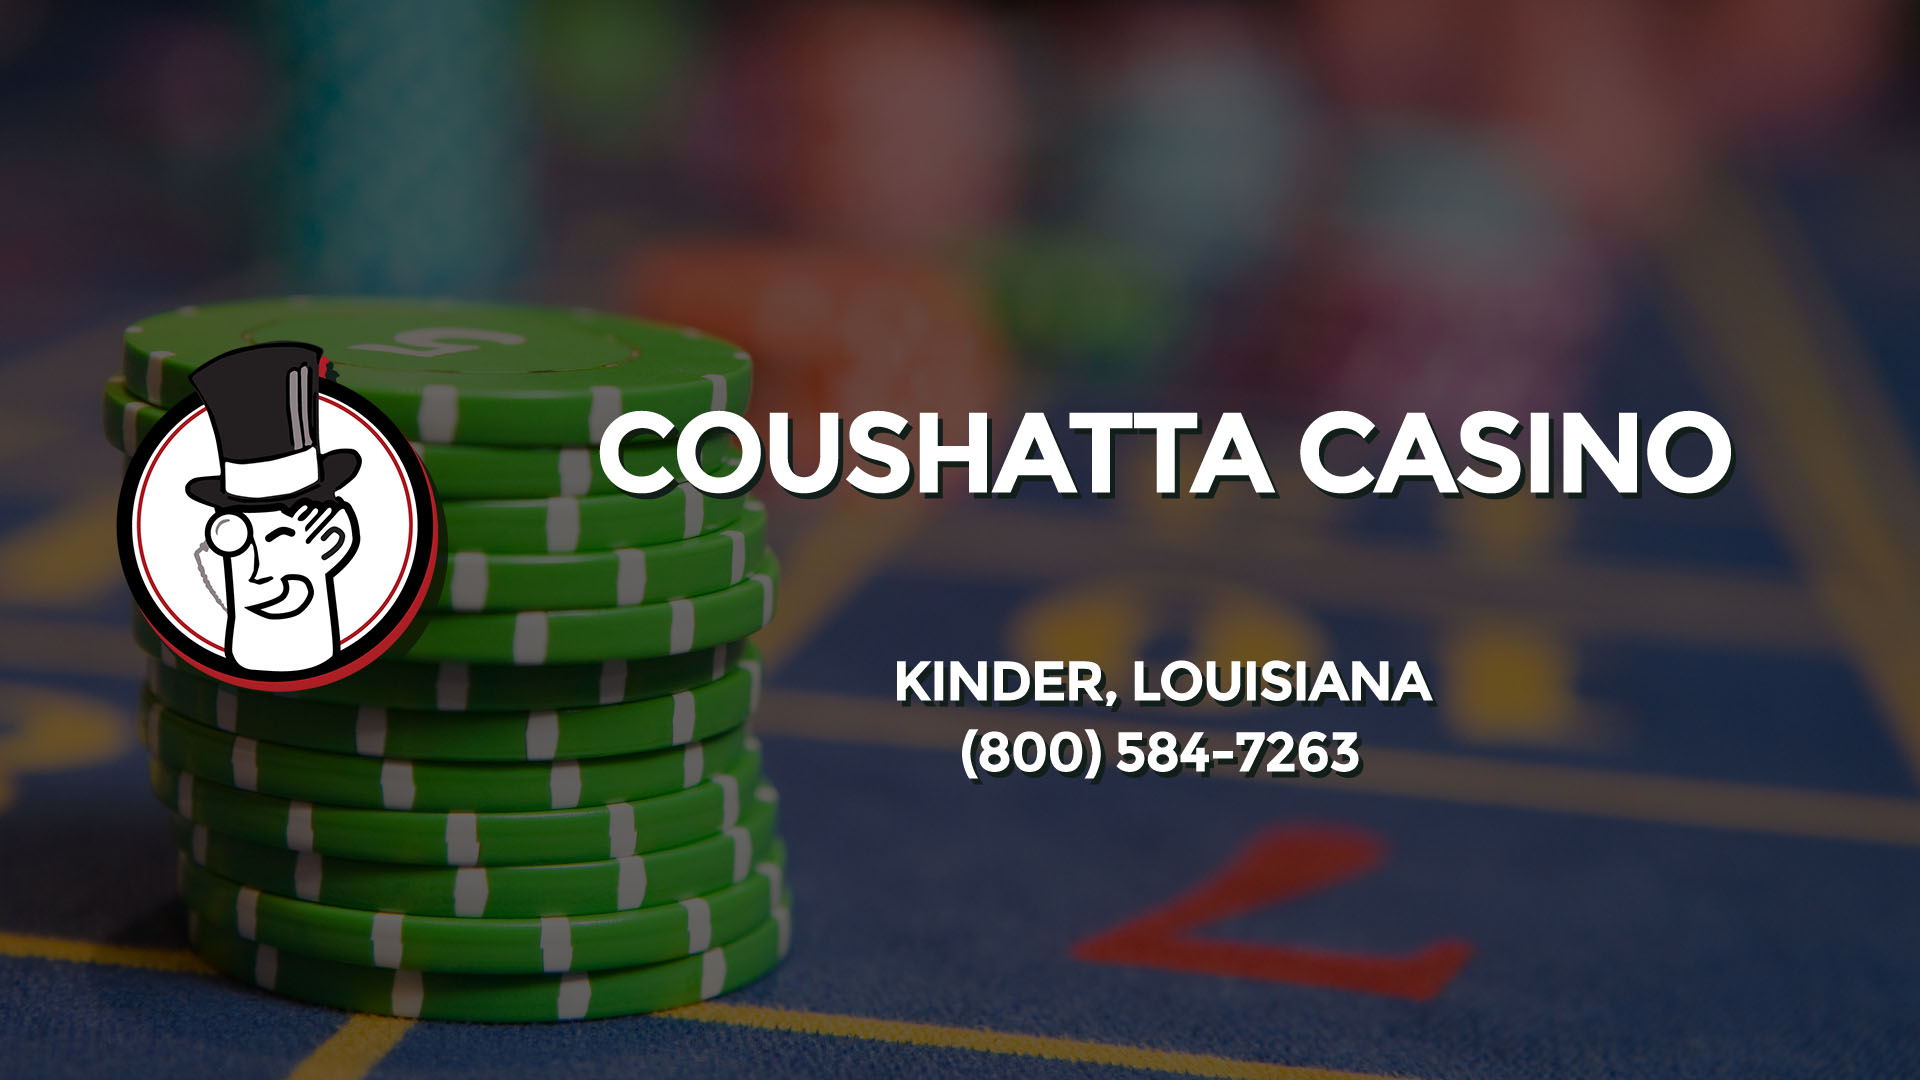 choushatta casino kinder la